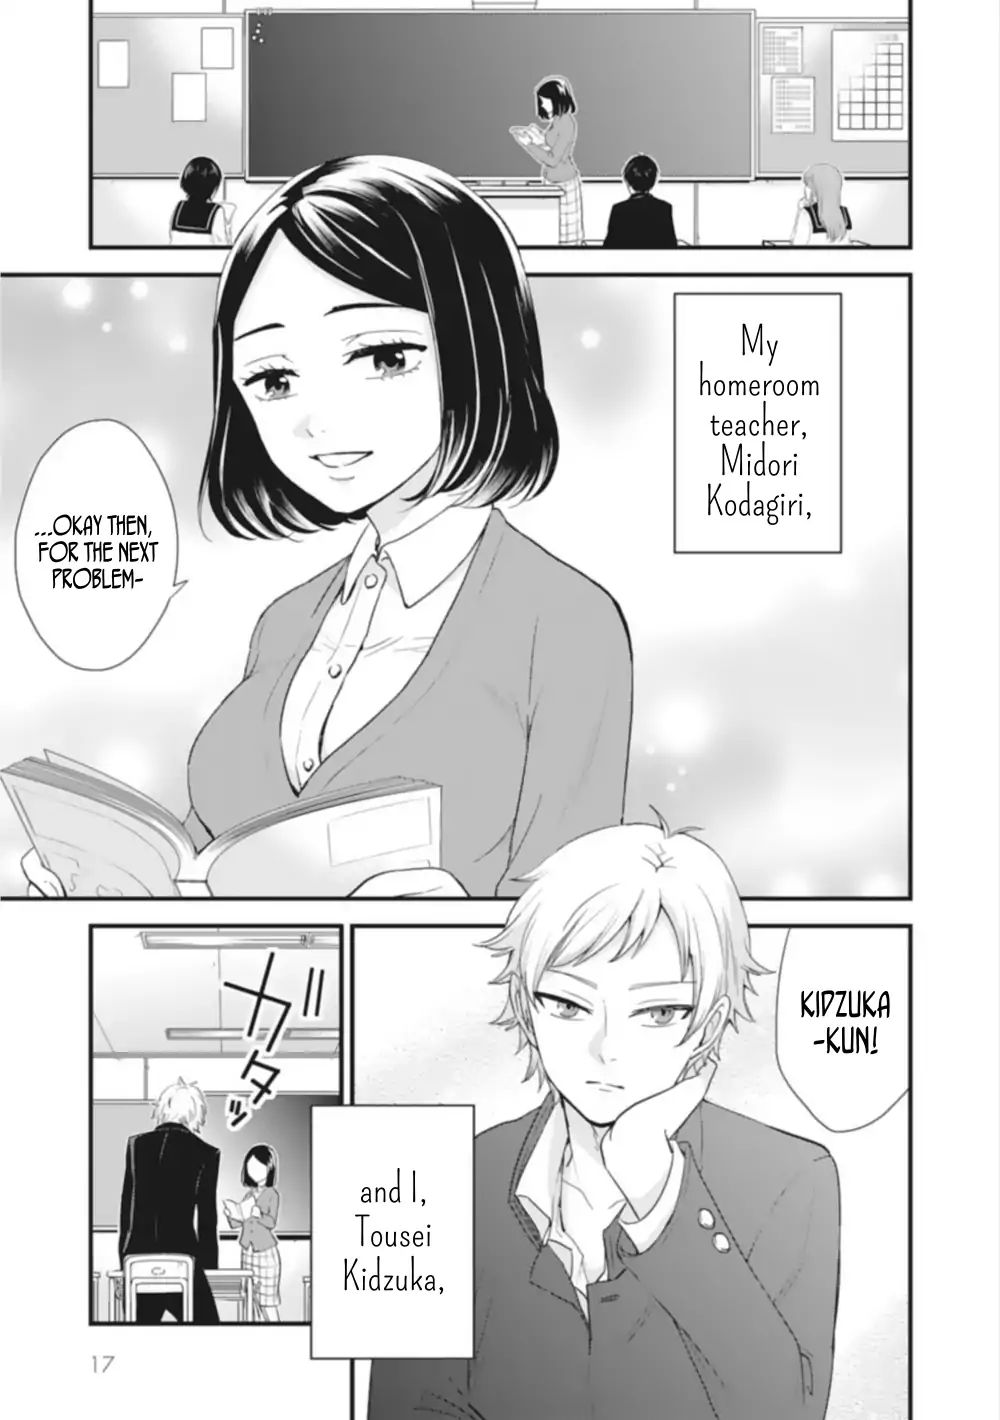 coach and student manga porn gay